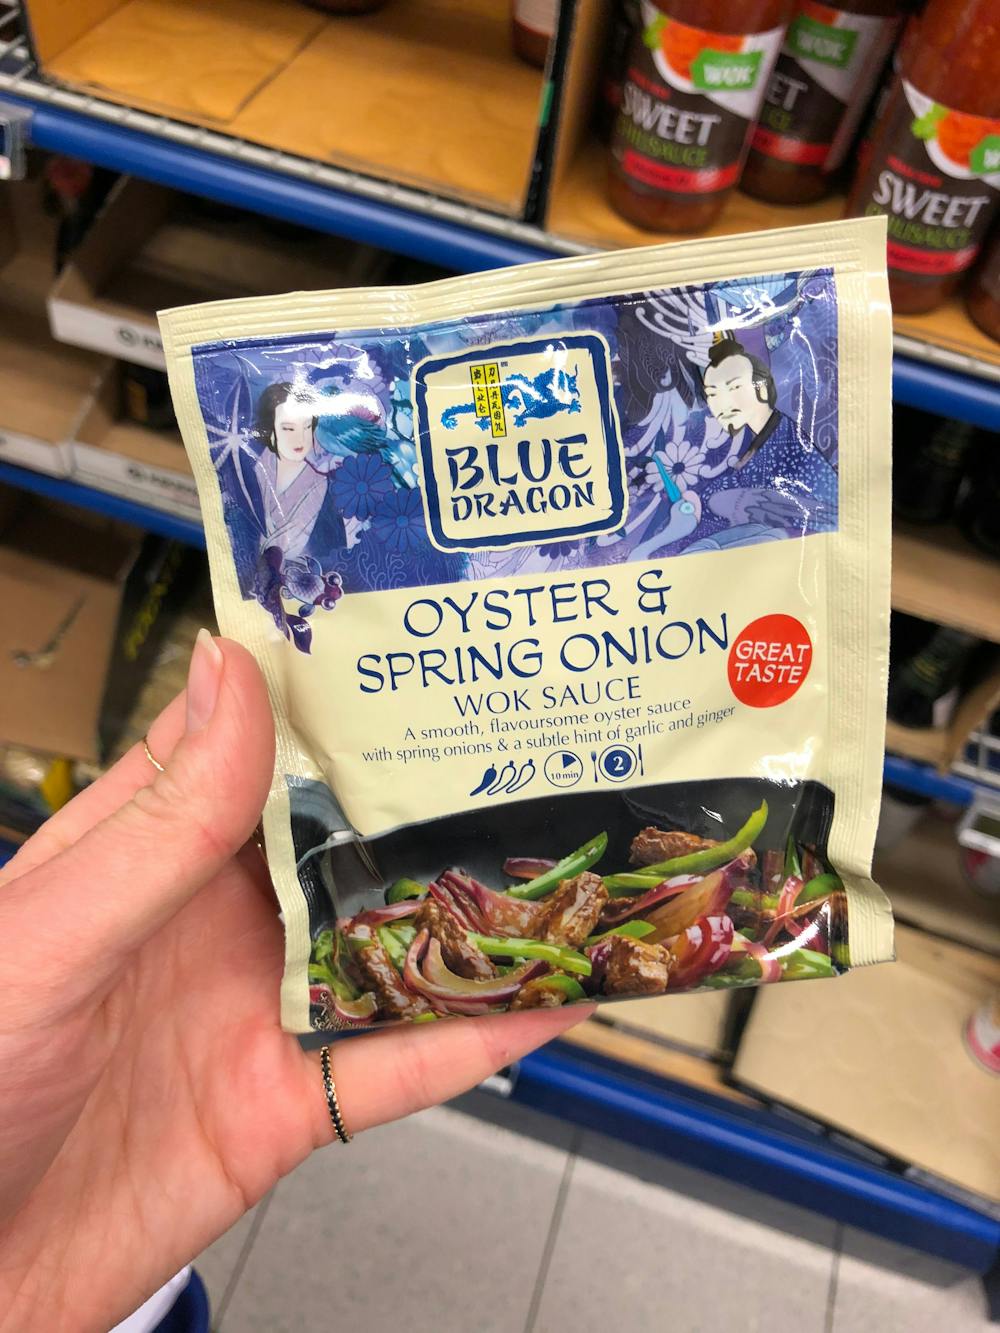 Oyster & spring onion wok sauce, Blue dragon